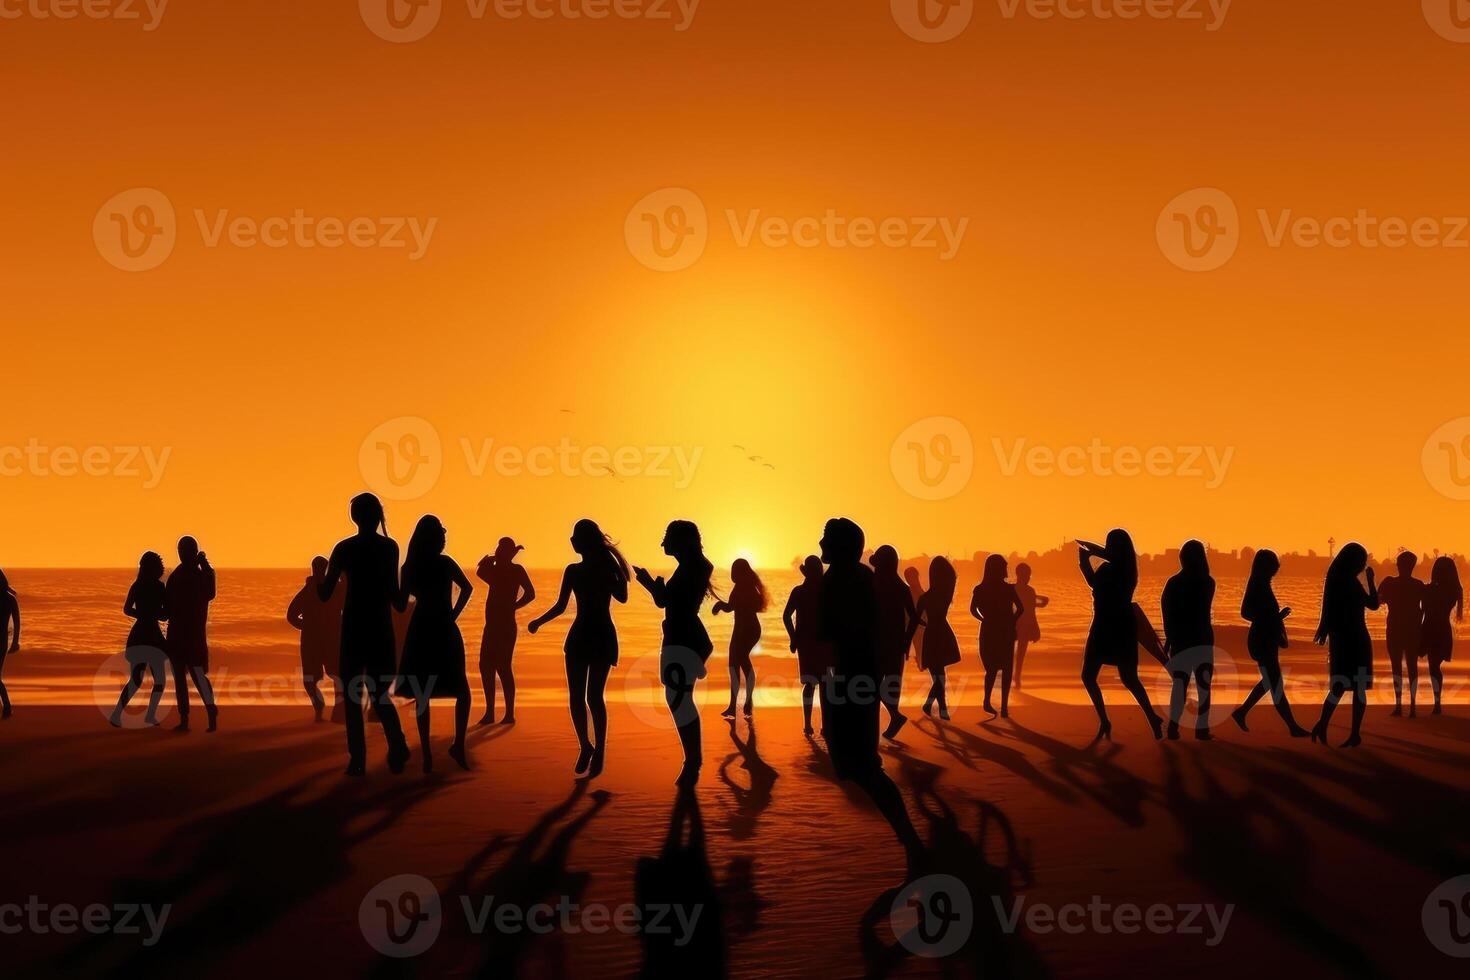 silhouetten van mensen dansen zomer strand partij concept foto